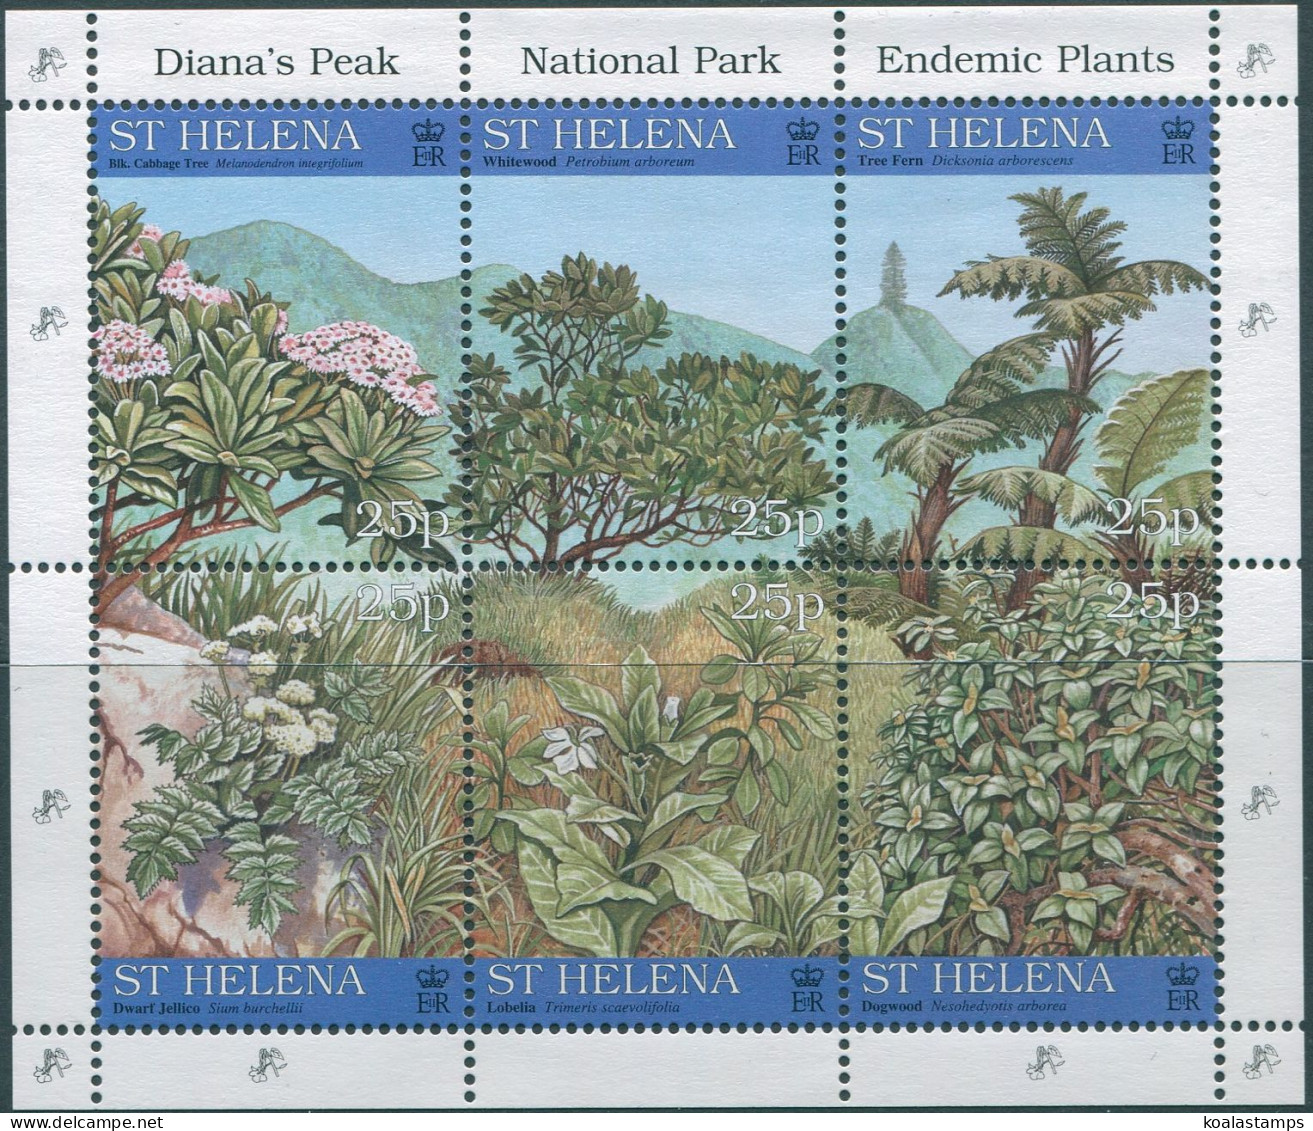 St Helena 1997 SG734-739 Endemic Plants Sheet Set MNH - St. Helena